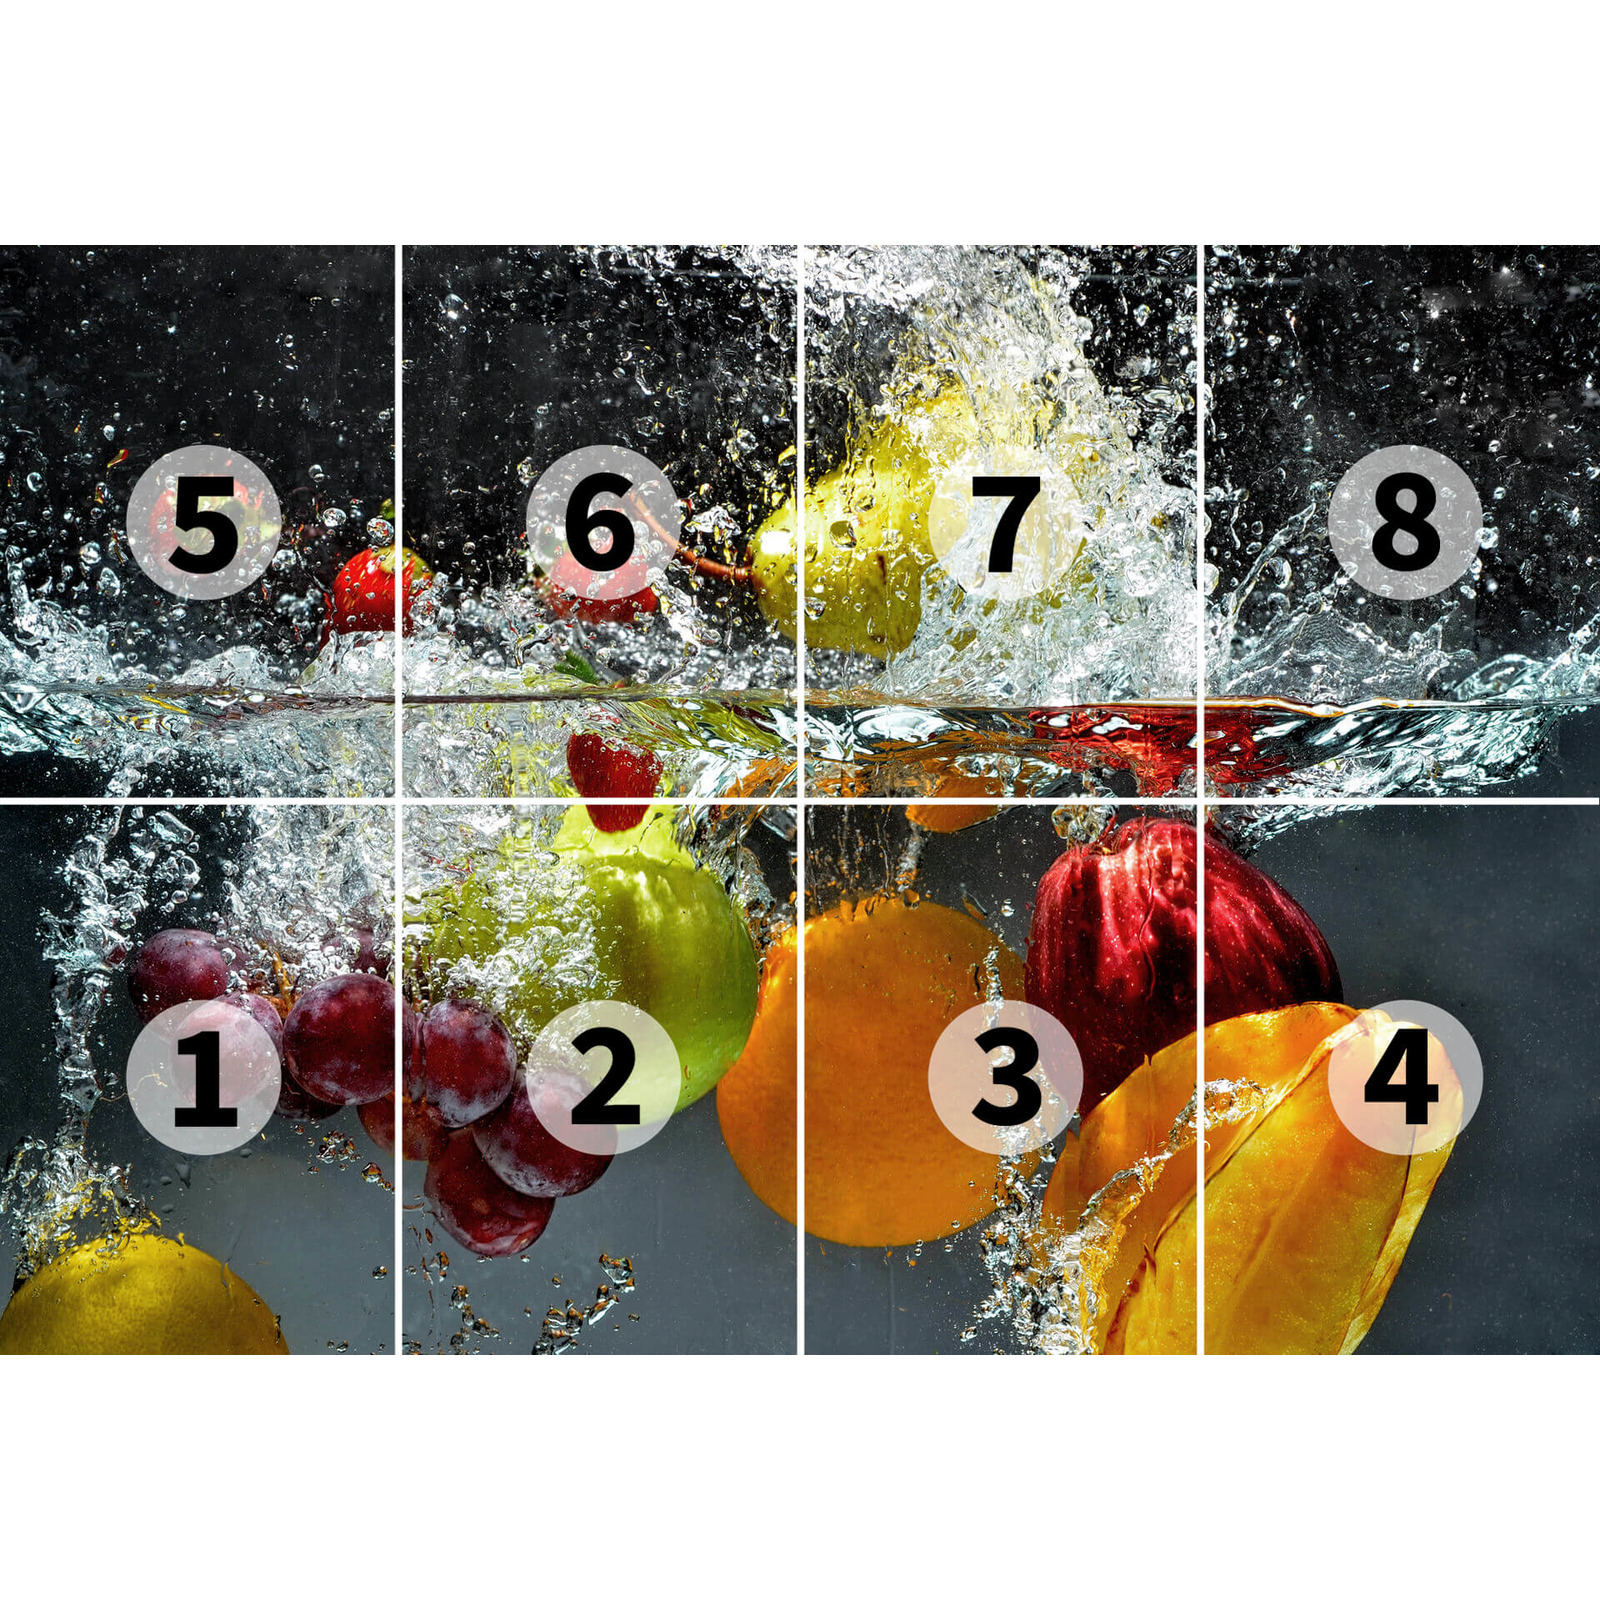             Fruit Behang: Appel, Sinaasappel, Druiven & Aardbeien
        